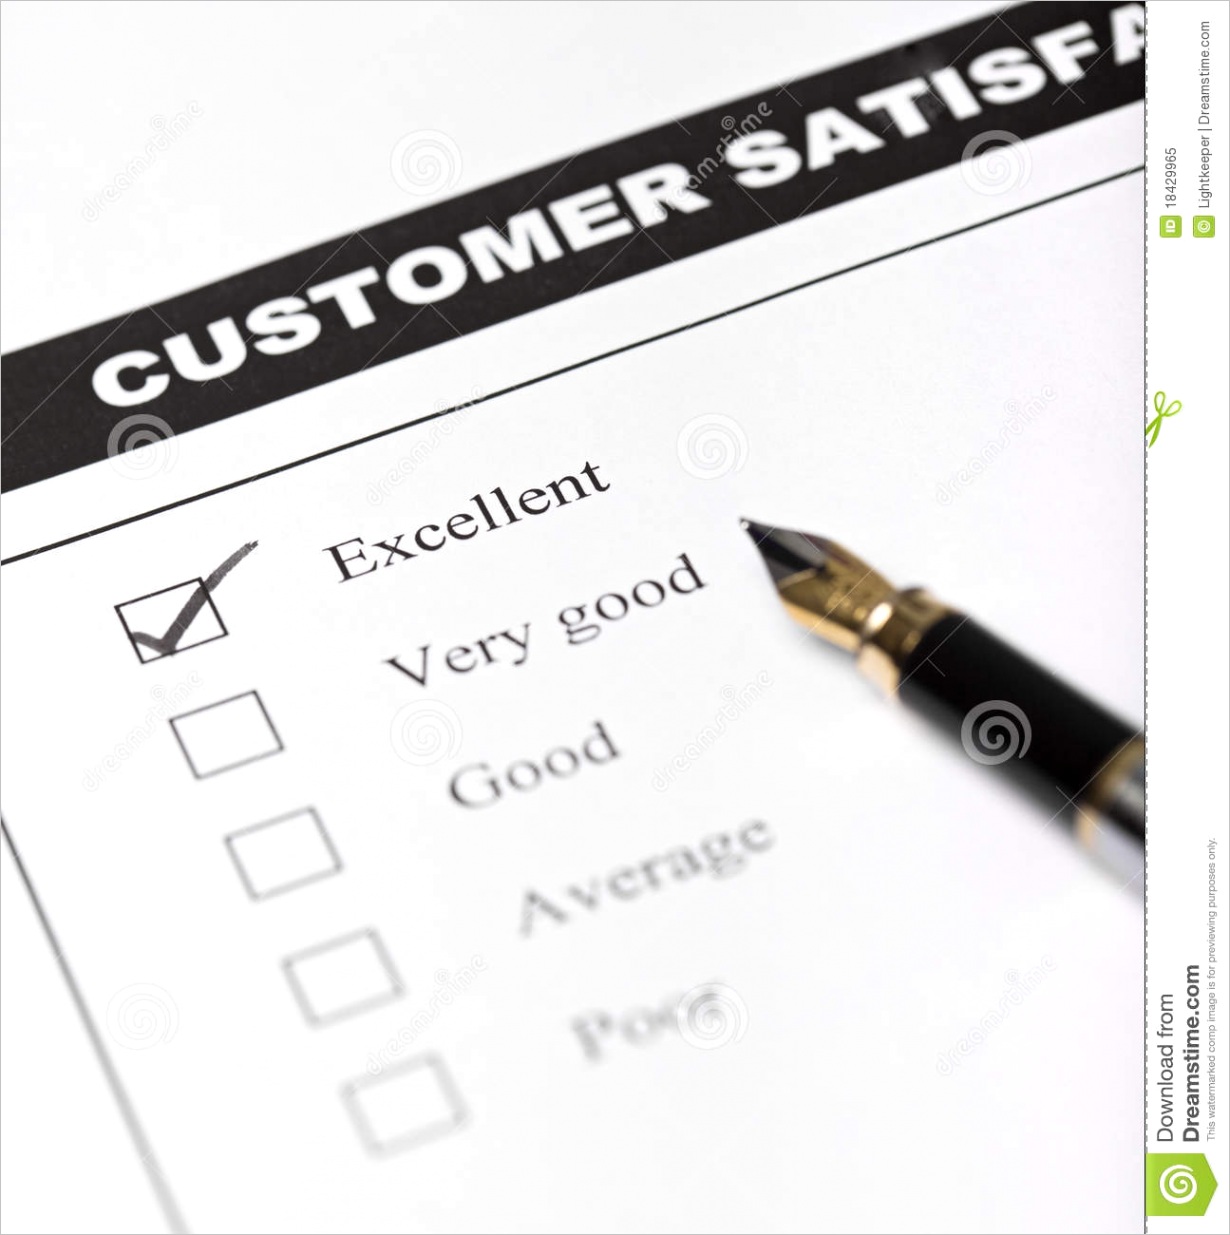 royalty free stock photo customer satisfaction survey form closeup image